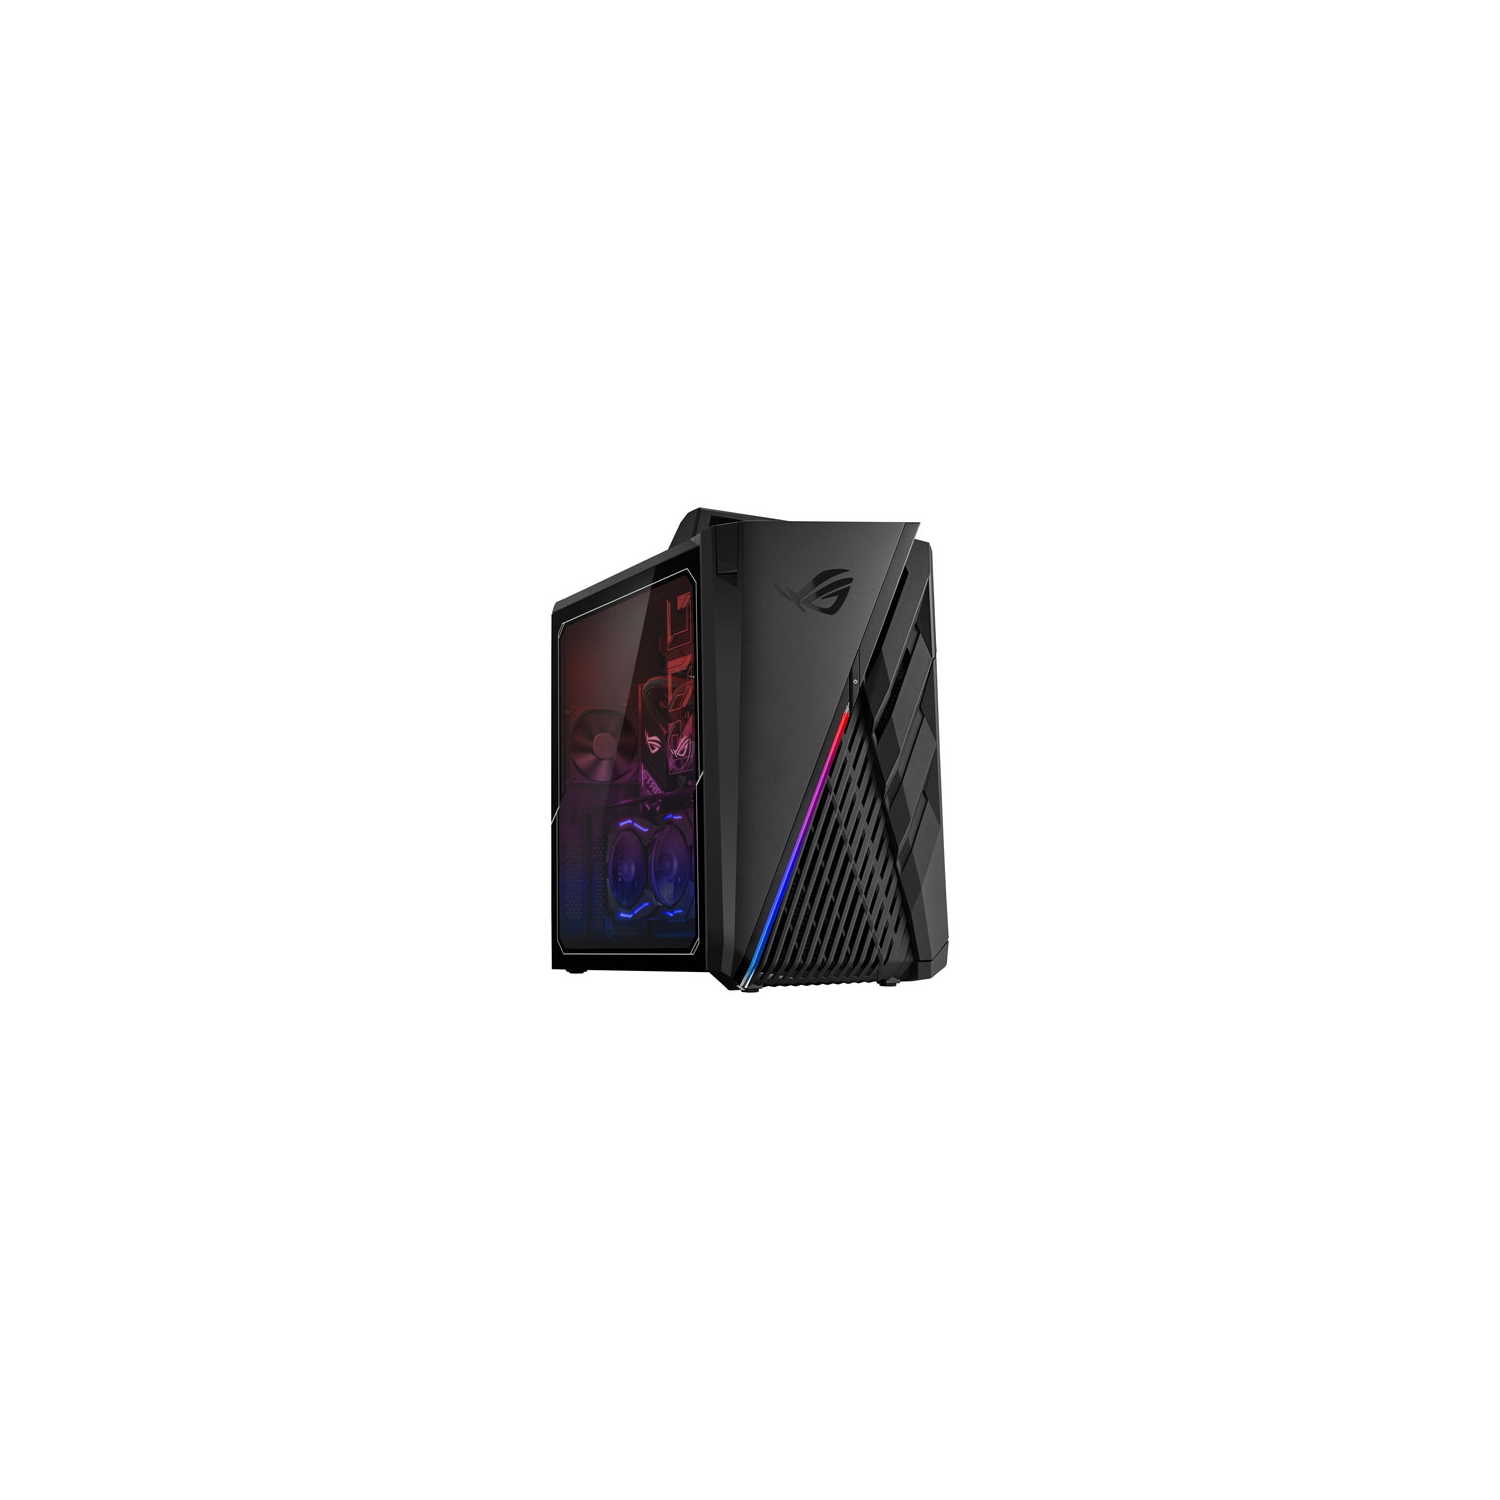 Refurbished (Excellent) - ASUS ROG Strix GT35 Gaming PC - Black (Intel i7-11700KF/2TB HDD/512GB SSD/16GB RAM/RTX 3080/Win 10)